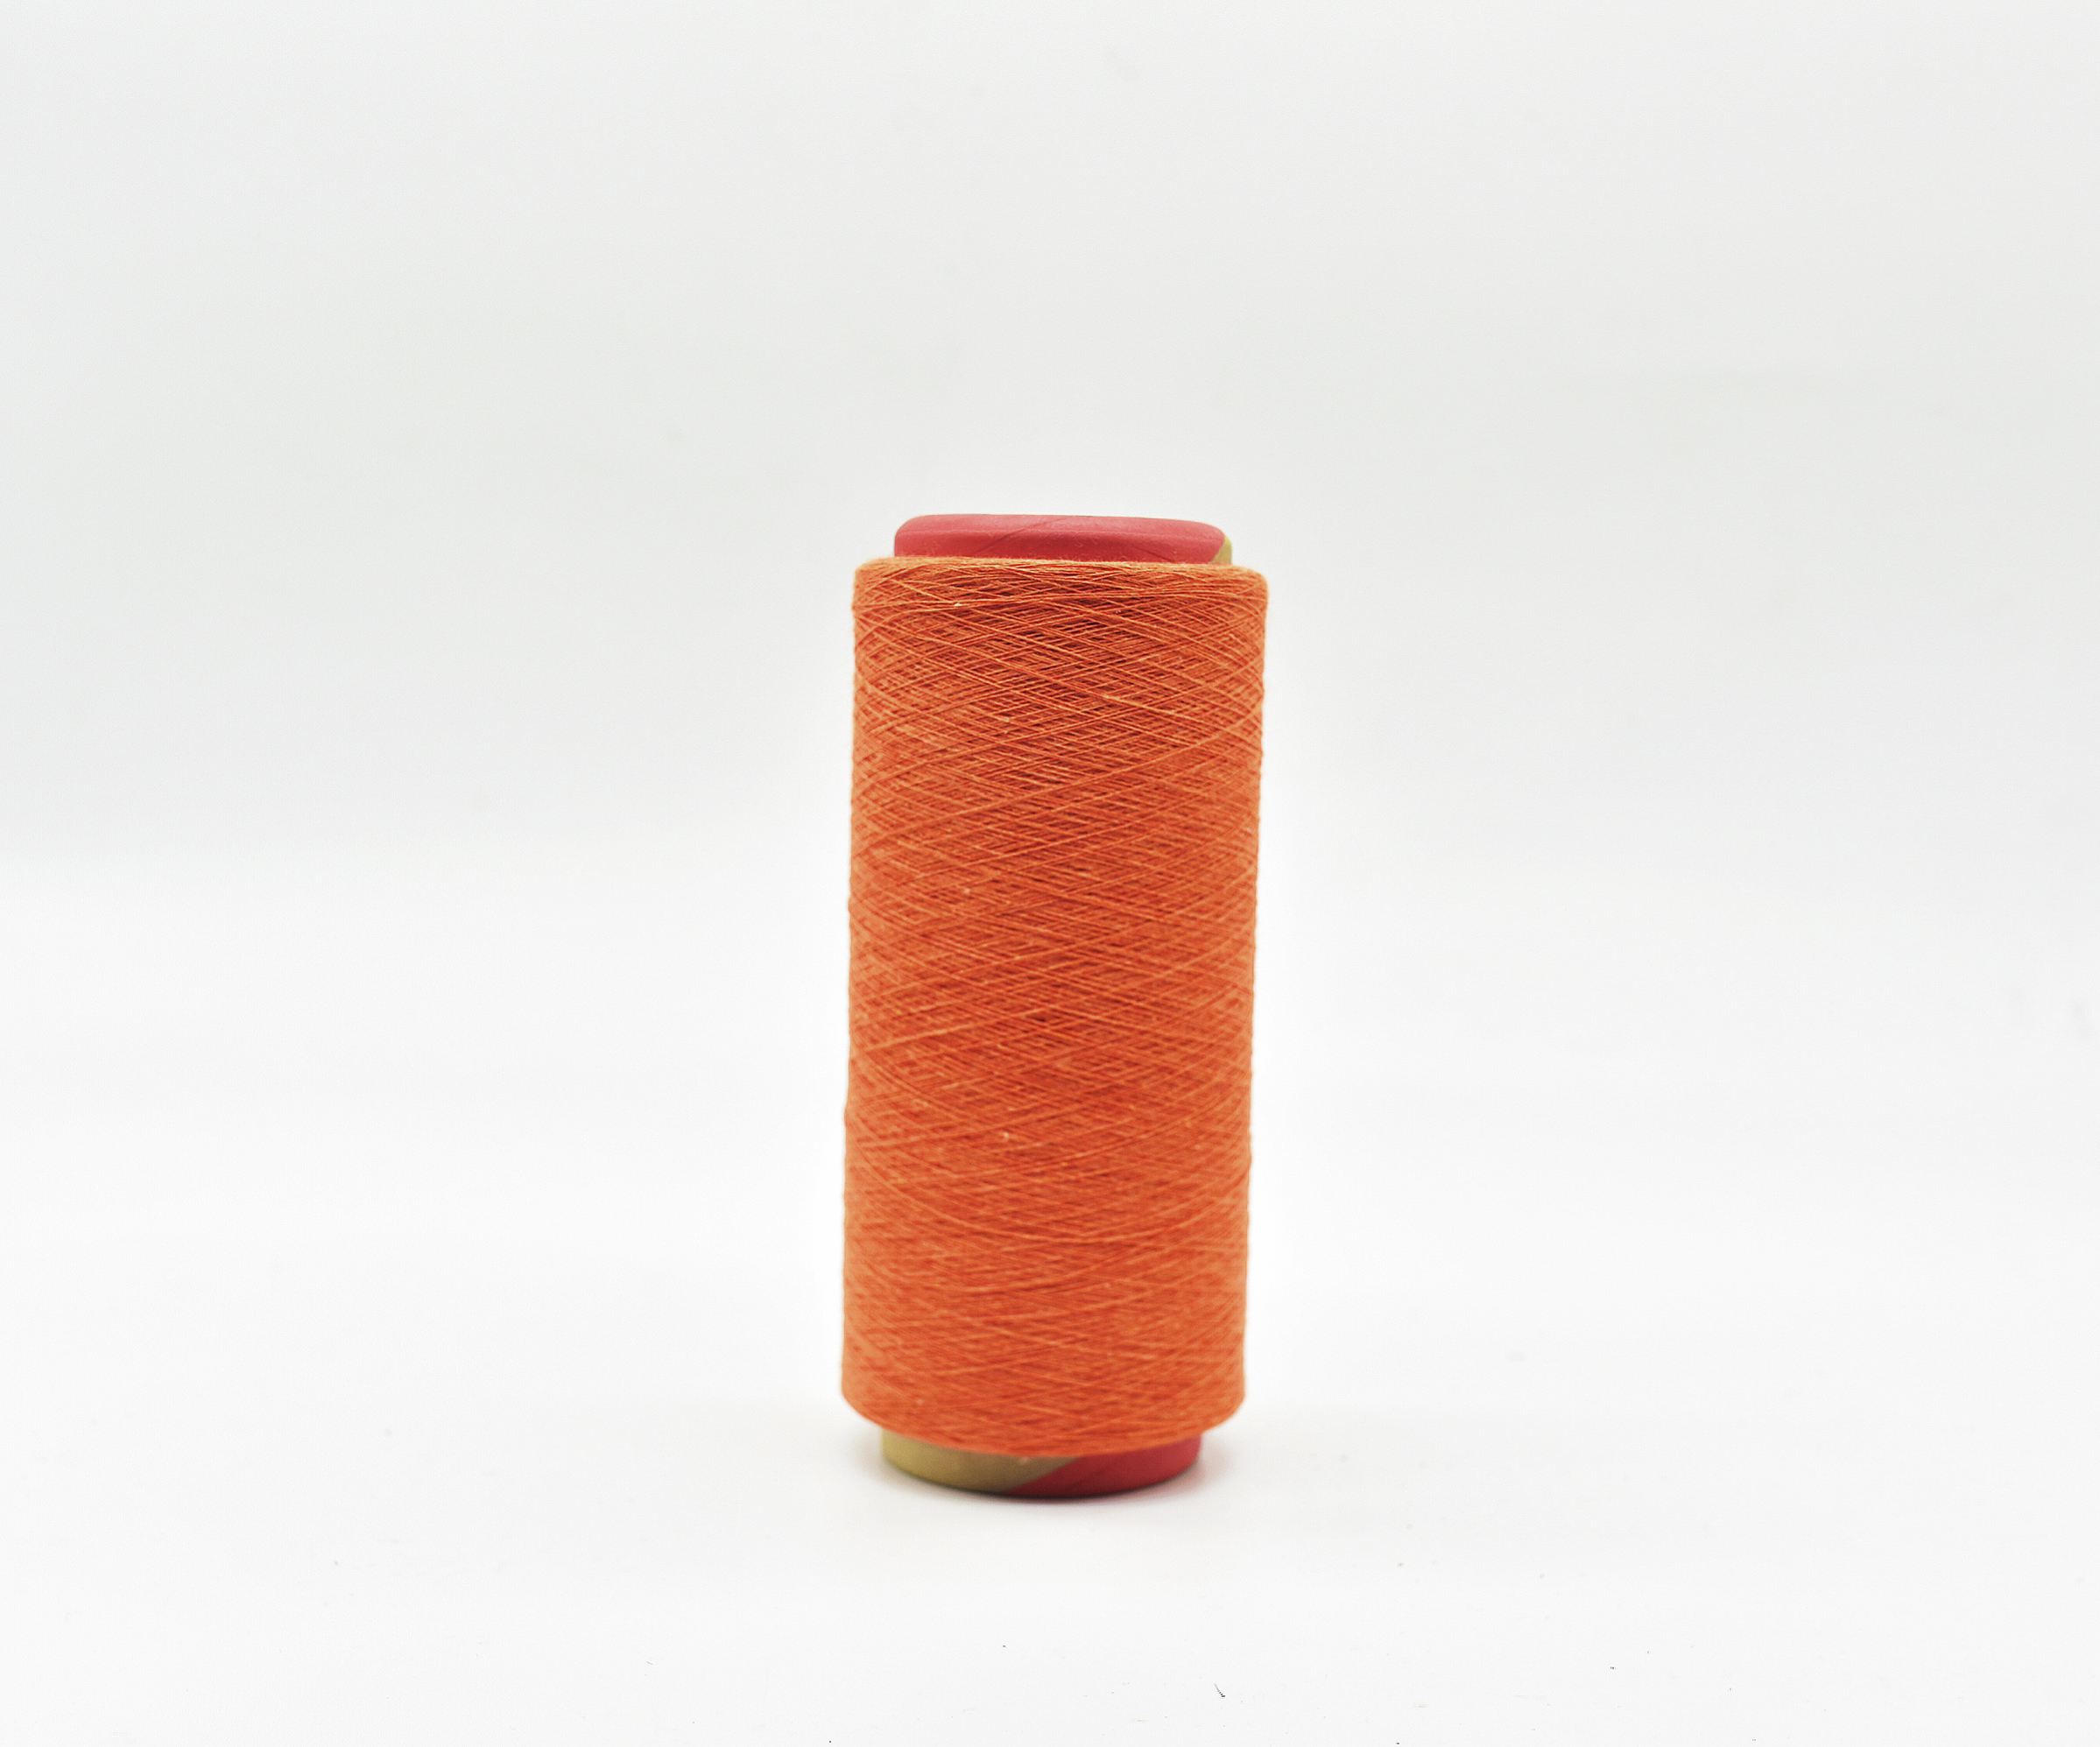 NE 16s orange recycled cotton polyester yarn for knitting socks 